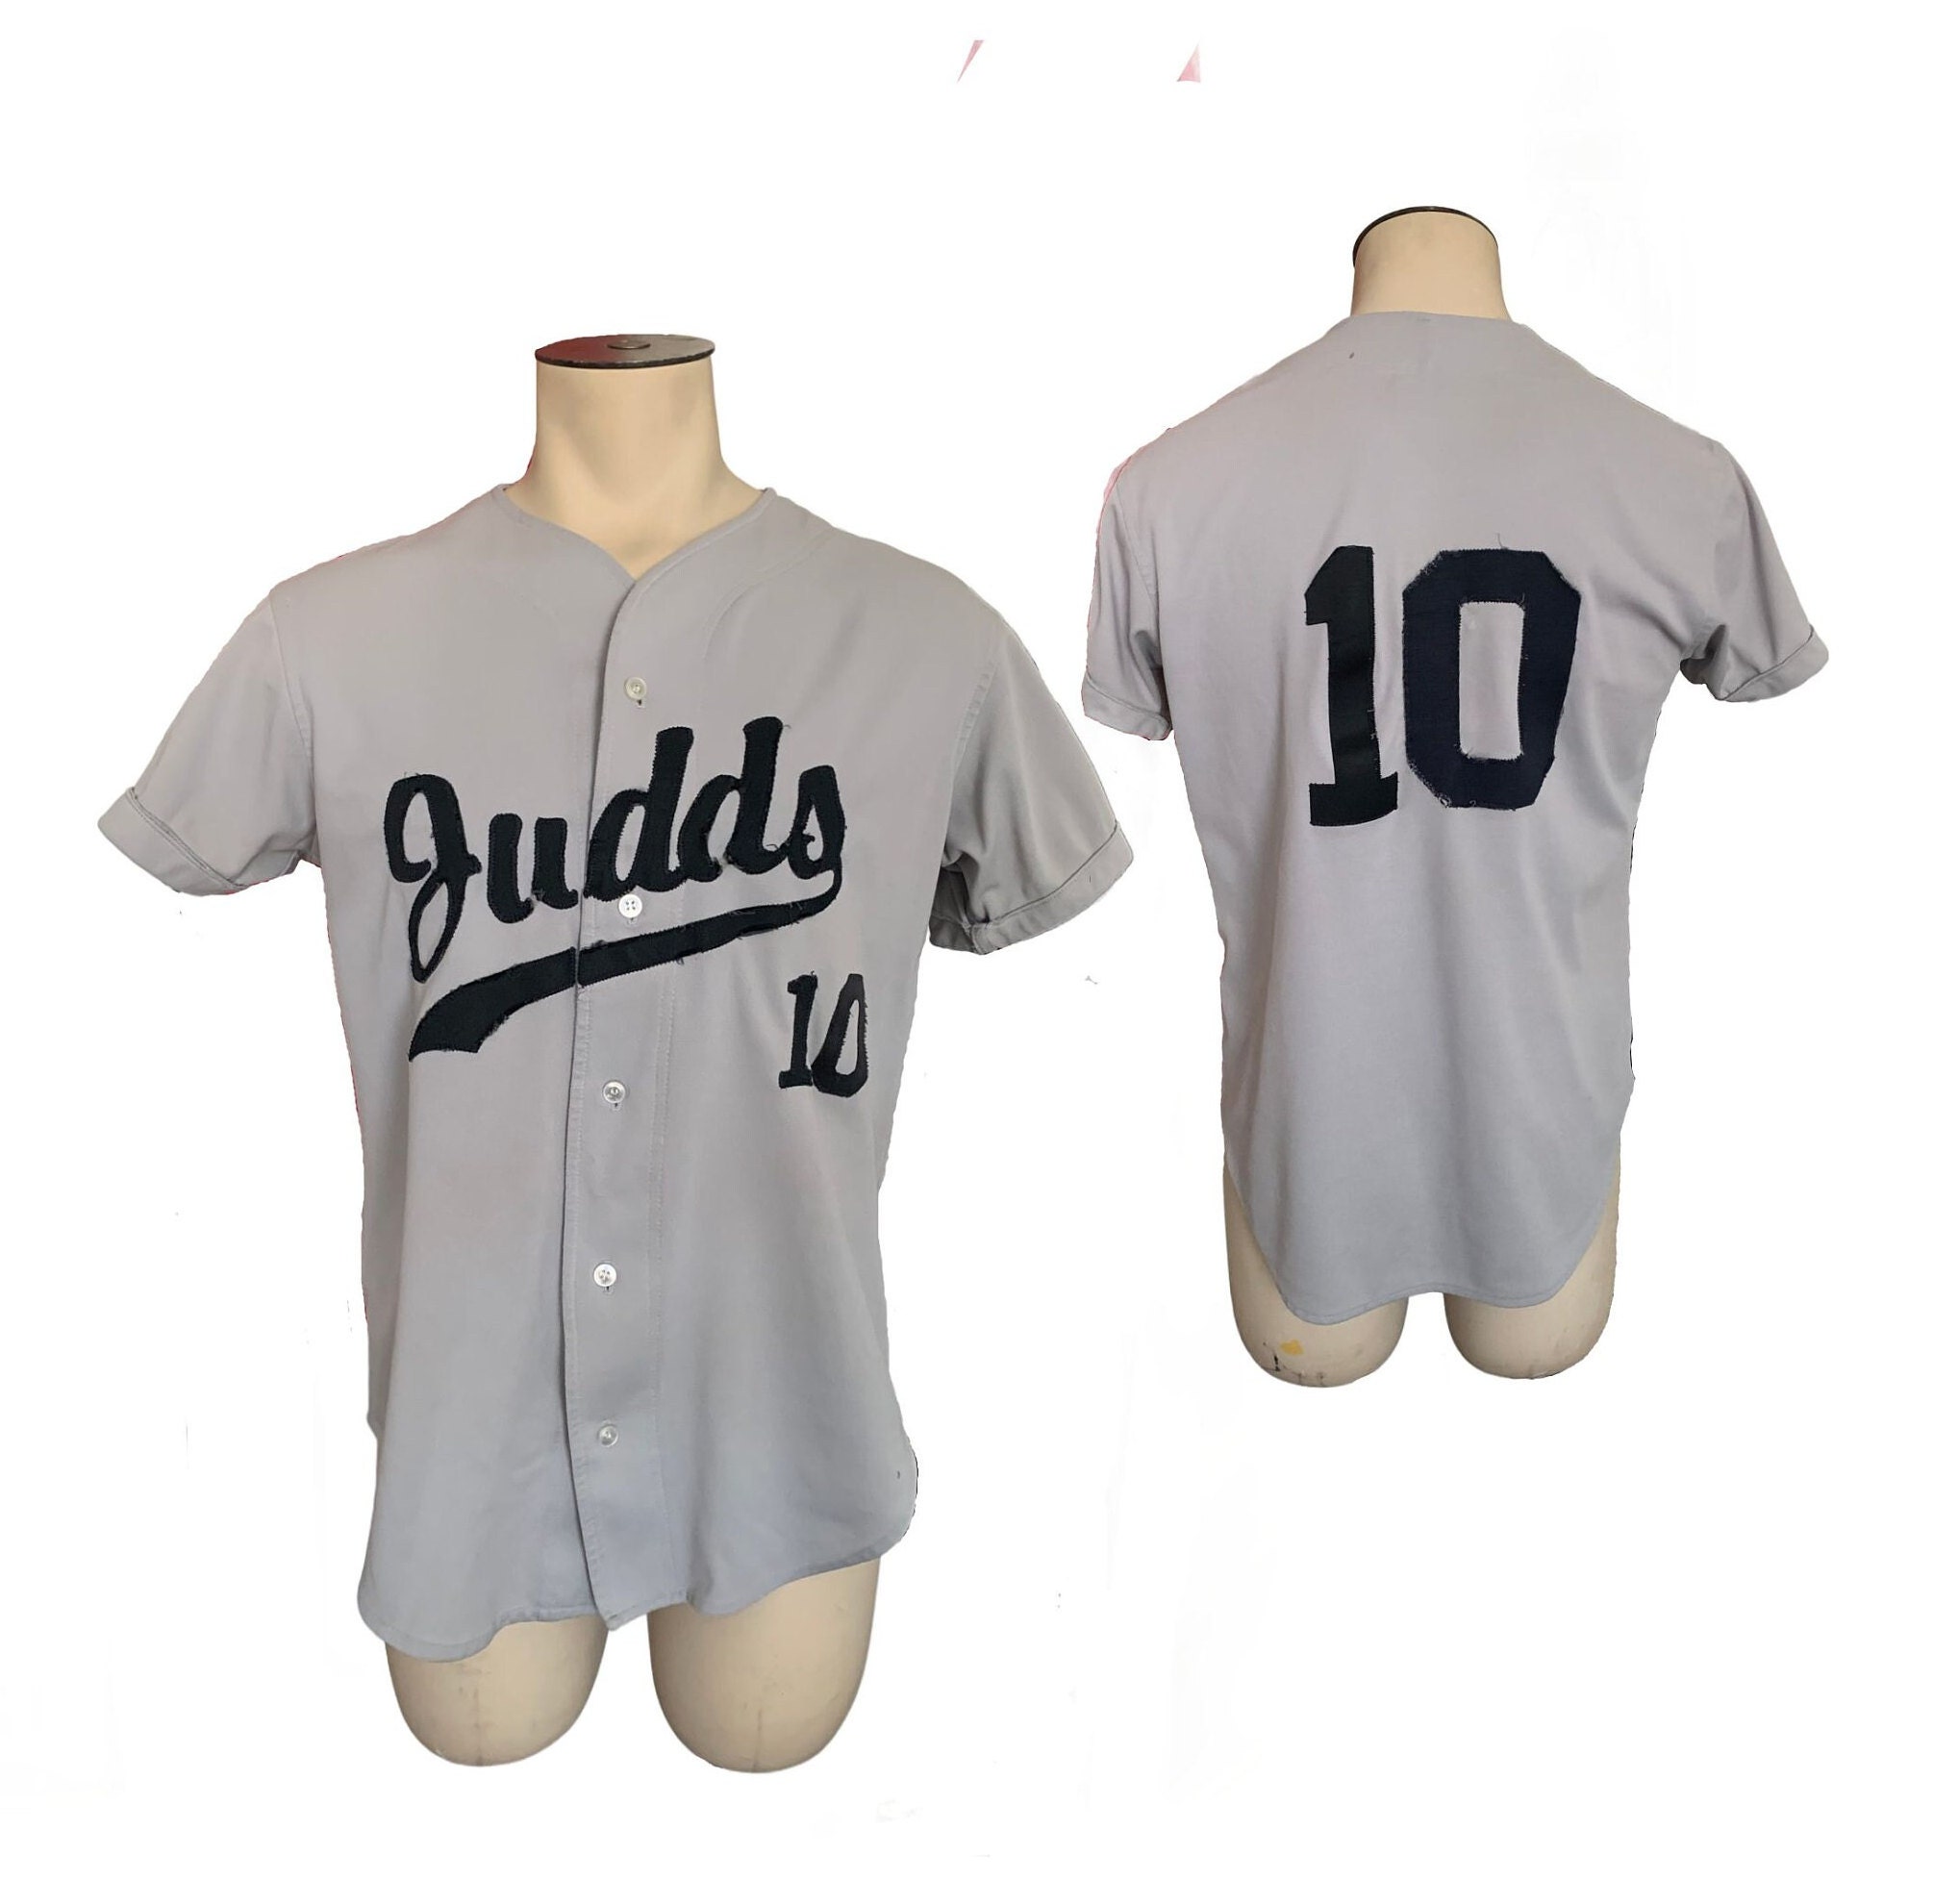 RARE 1950-60s Vintage Baseball Jersey - Jerseys & Cleats